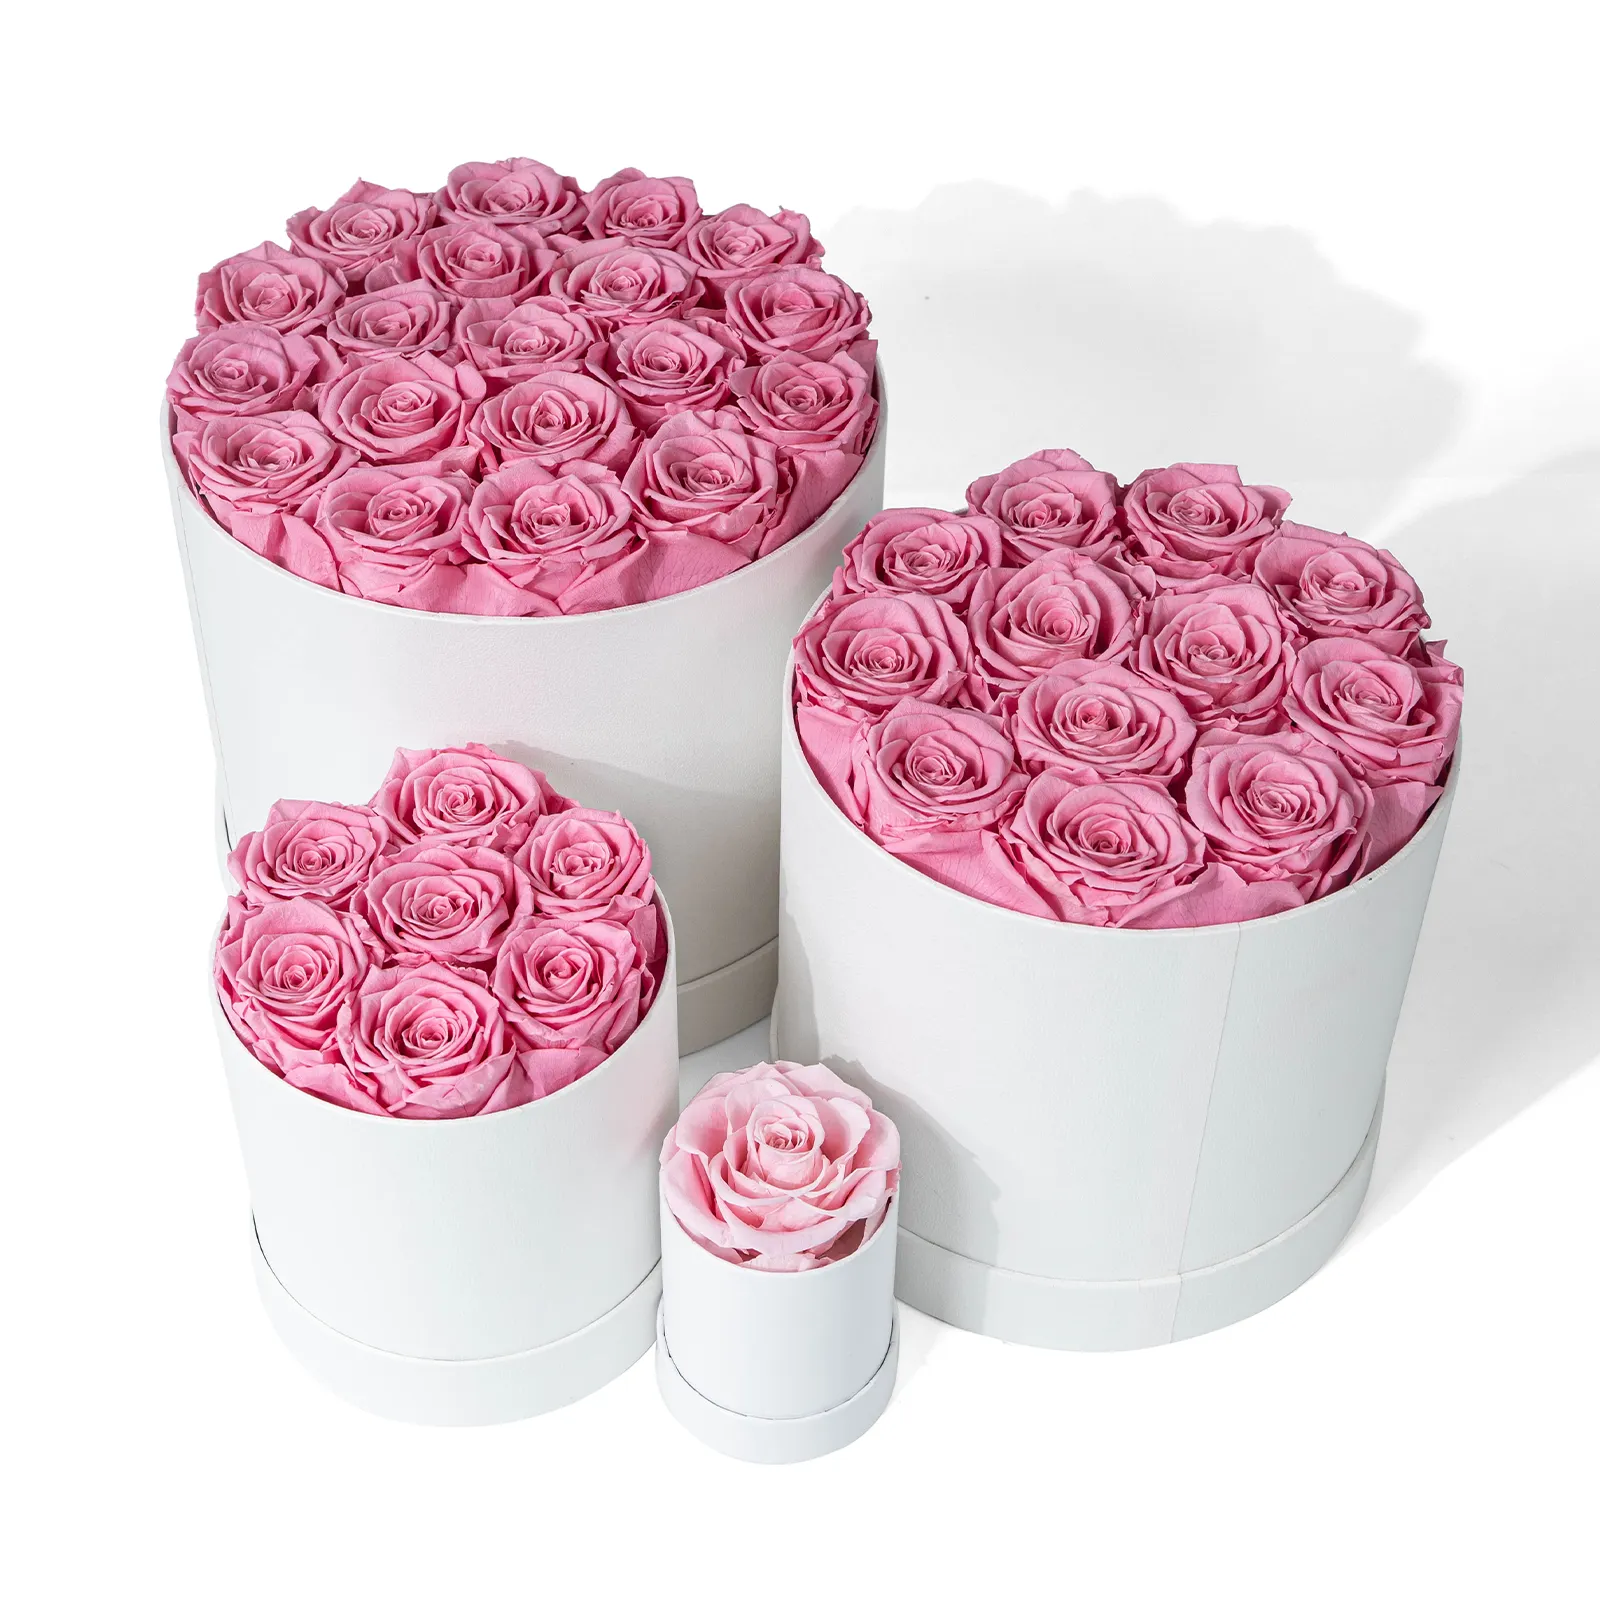 MCFloralピンクローズコレクションバースデーデコレーションエバーラスティングロングライフ保存ローズボックスラウンドボックスの装飾花